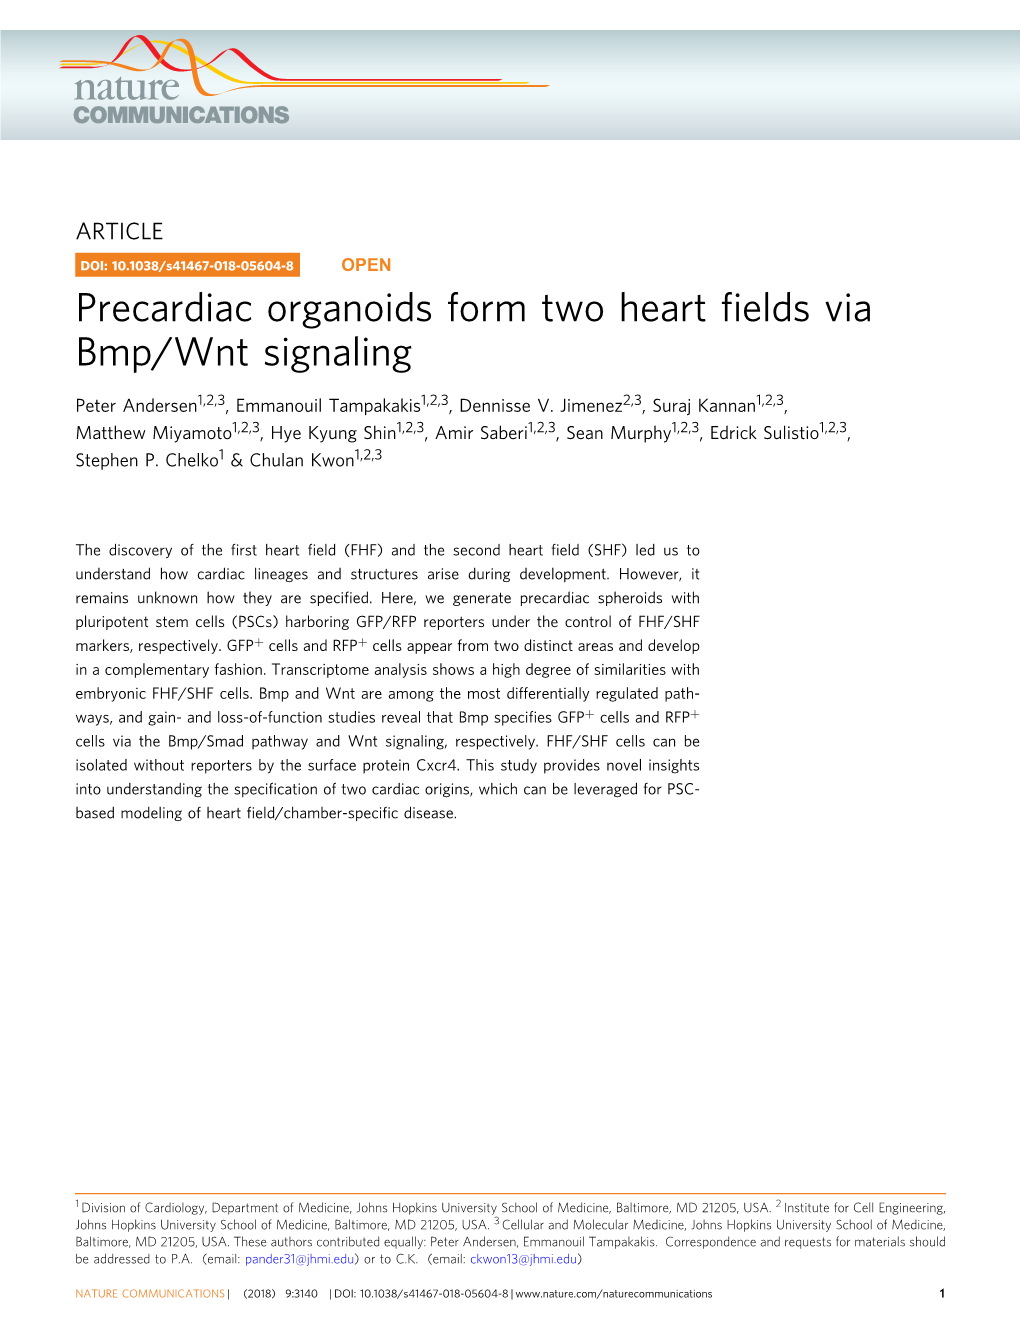 Precardiac Organoids Form Two Heart Fields Via Bmp/Wnt Signaling